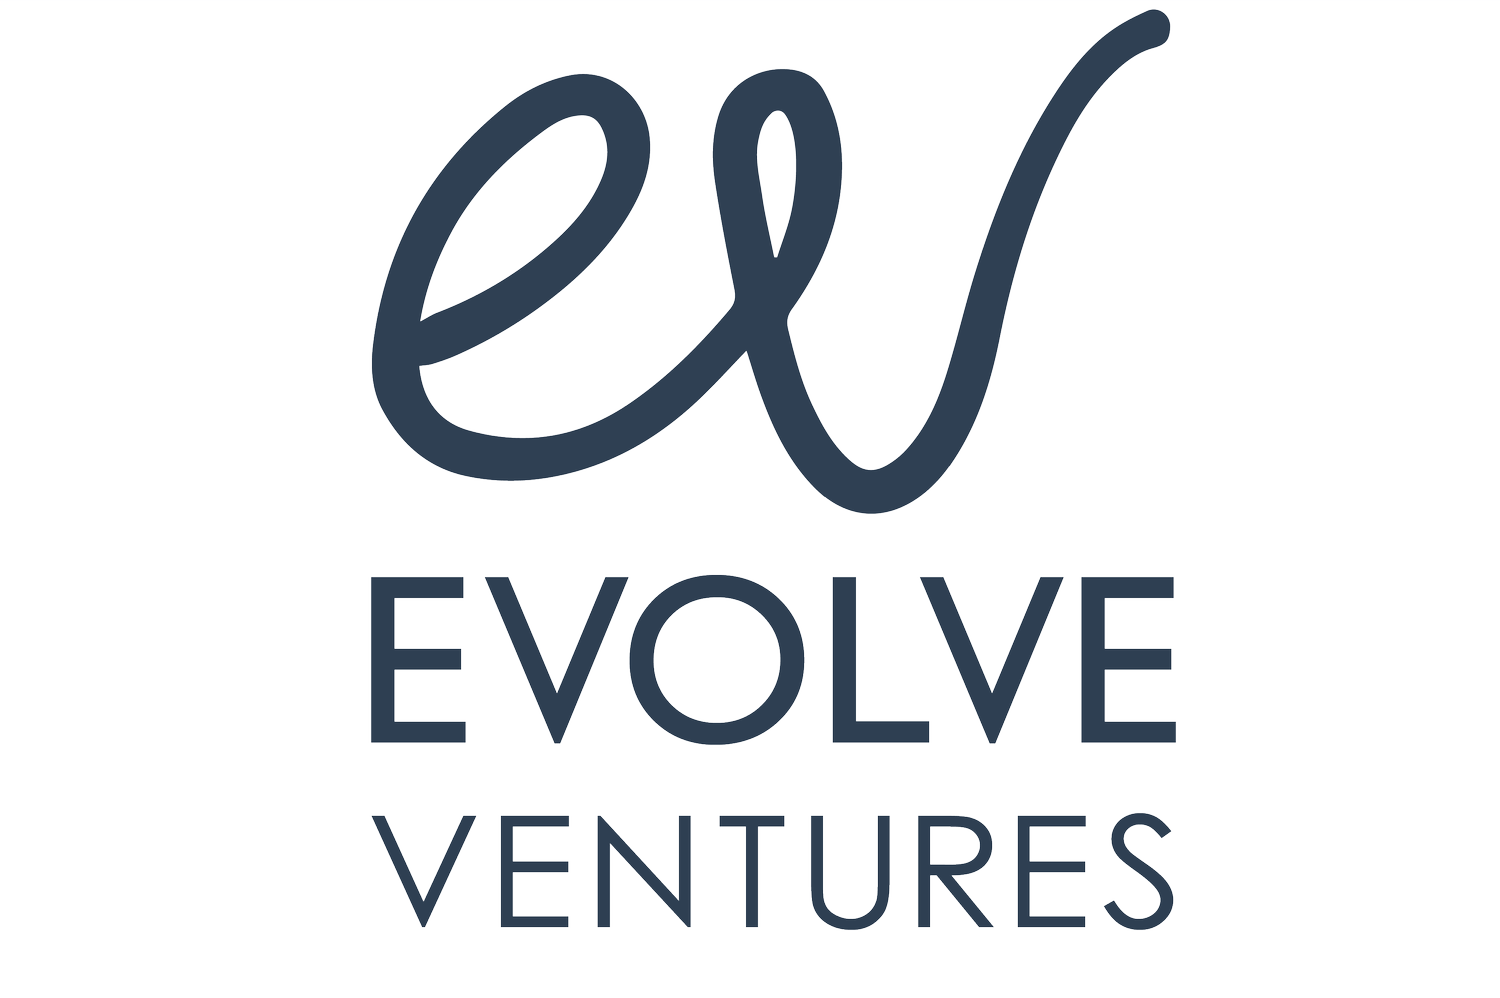 Evolve Ventures - True Developers at Heart